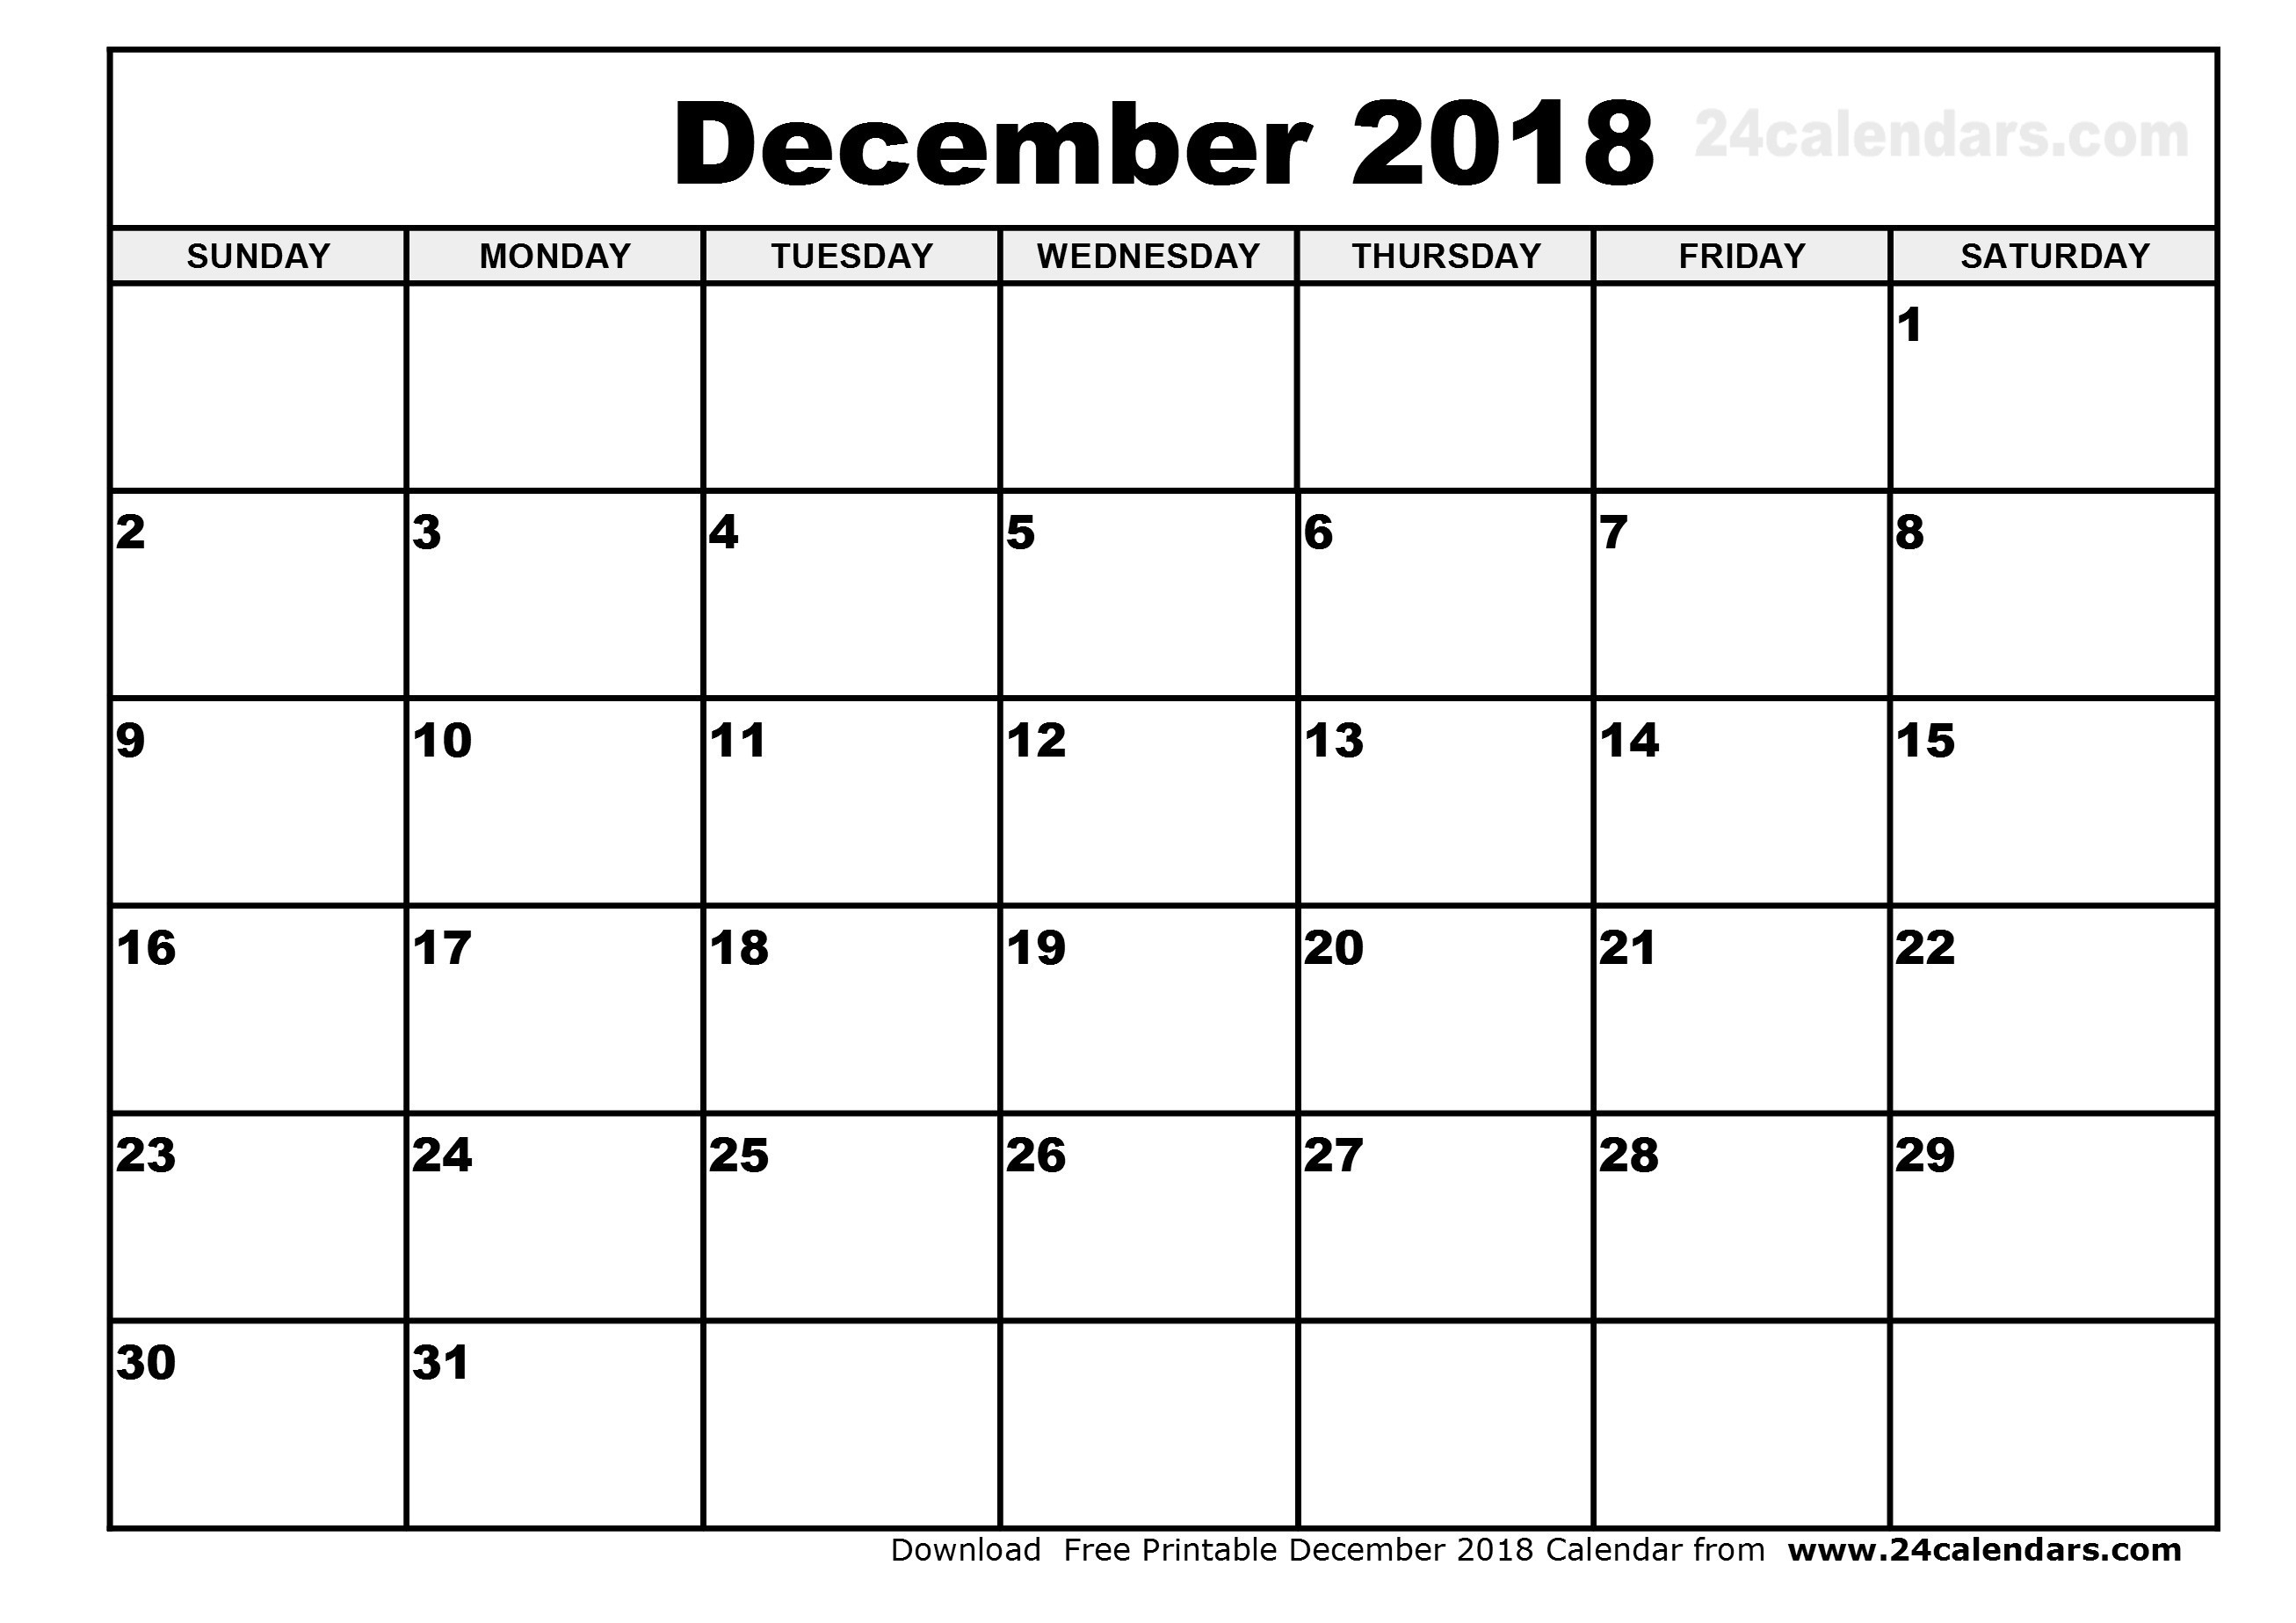 free printable mini calendar